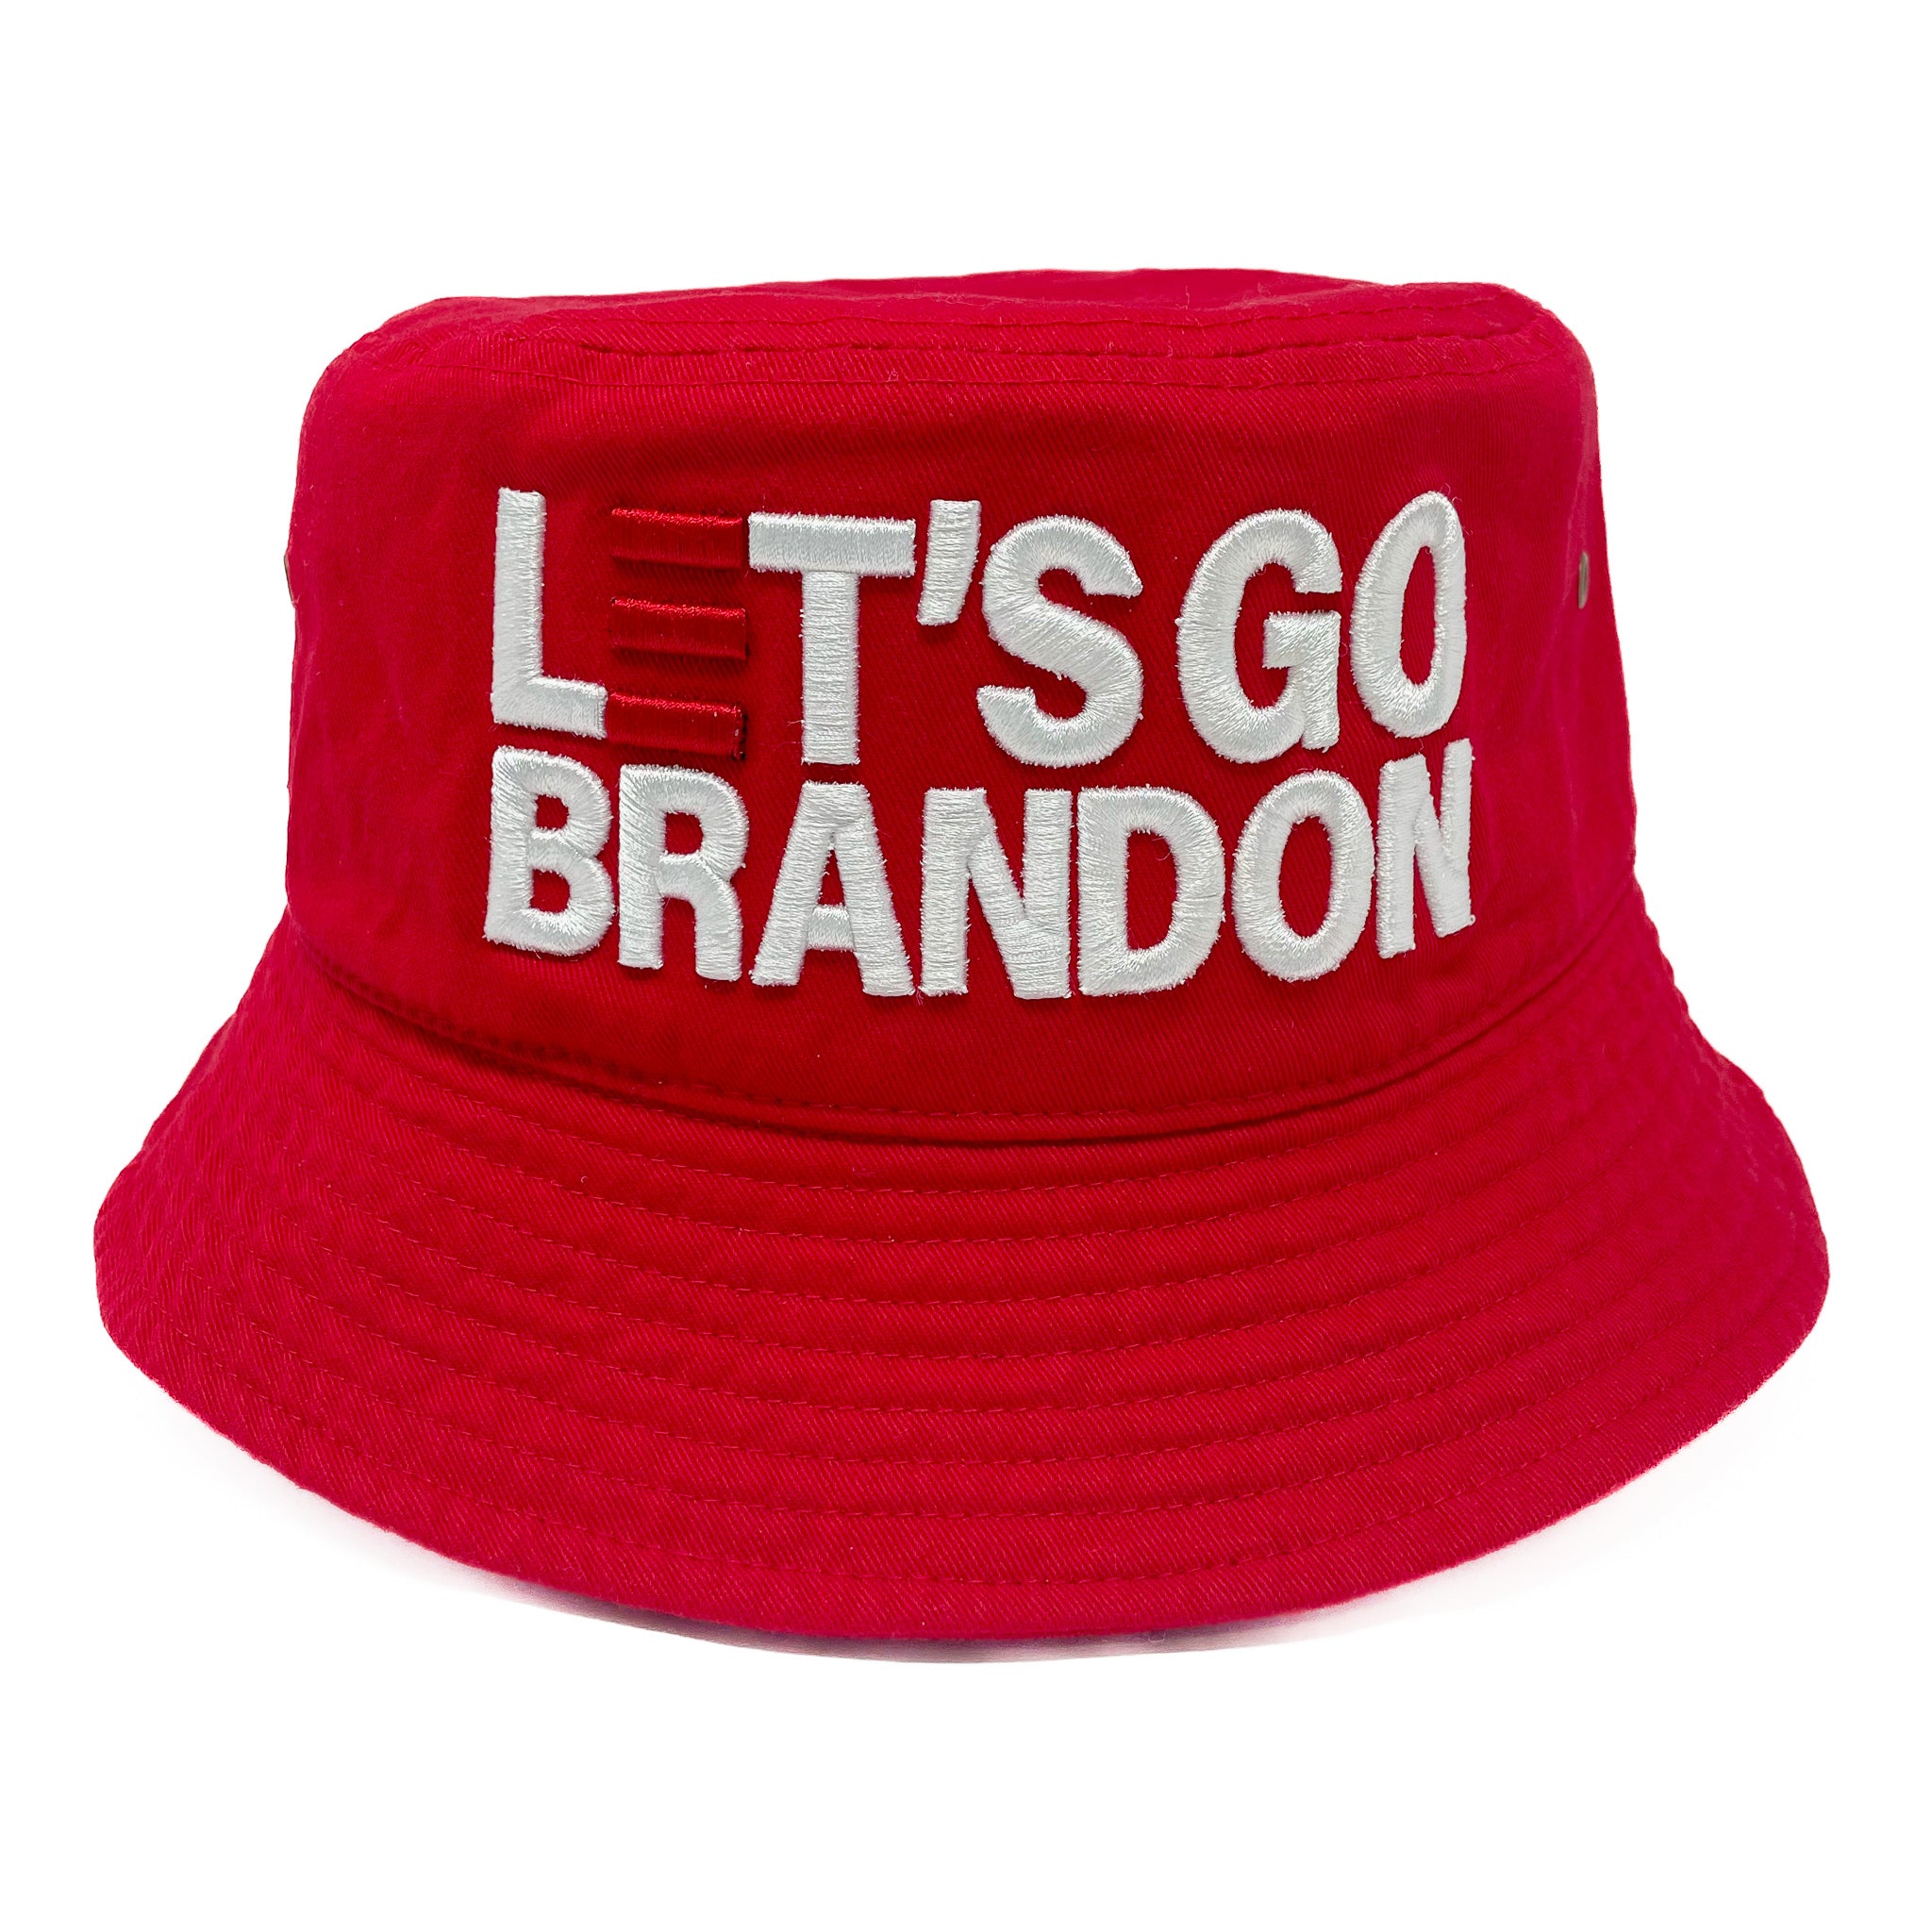 Let's Go Brandon Bucket Hat (2 Colors)